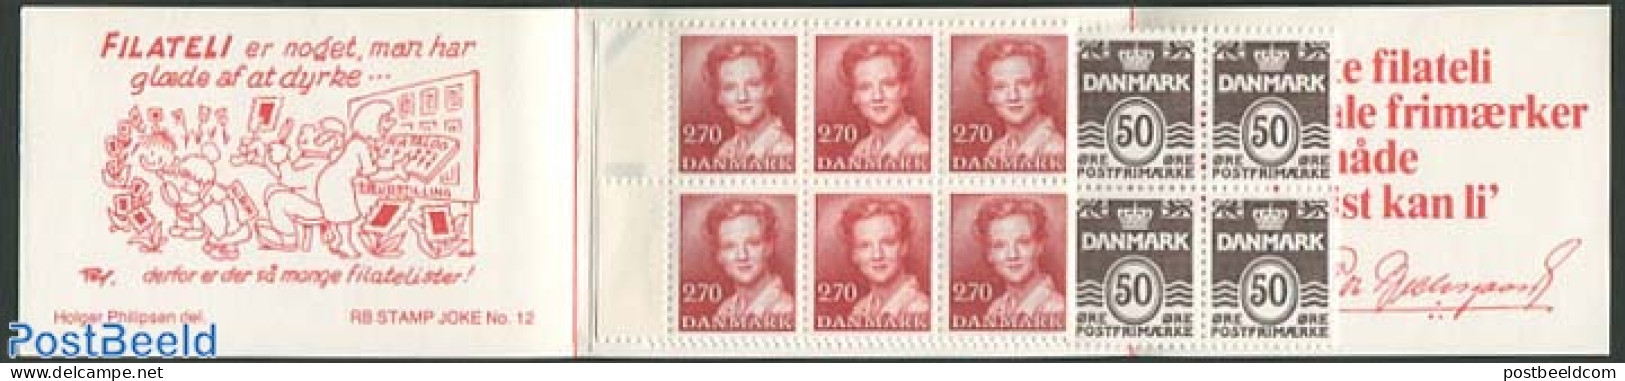 Denmark 1984 Definitives Booklet (H27 On Cover), Mint NH, Stamp Booklets - Unused Stamps